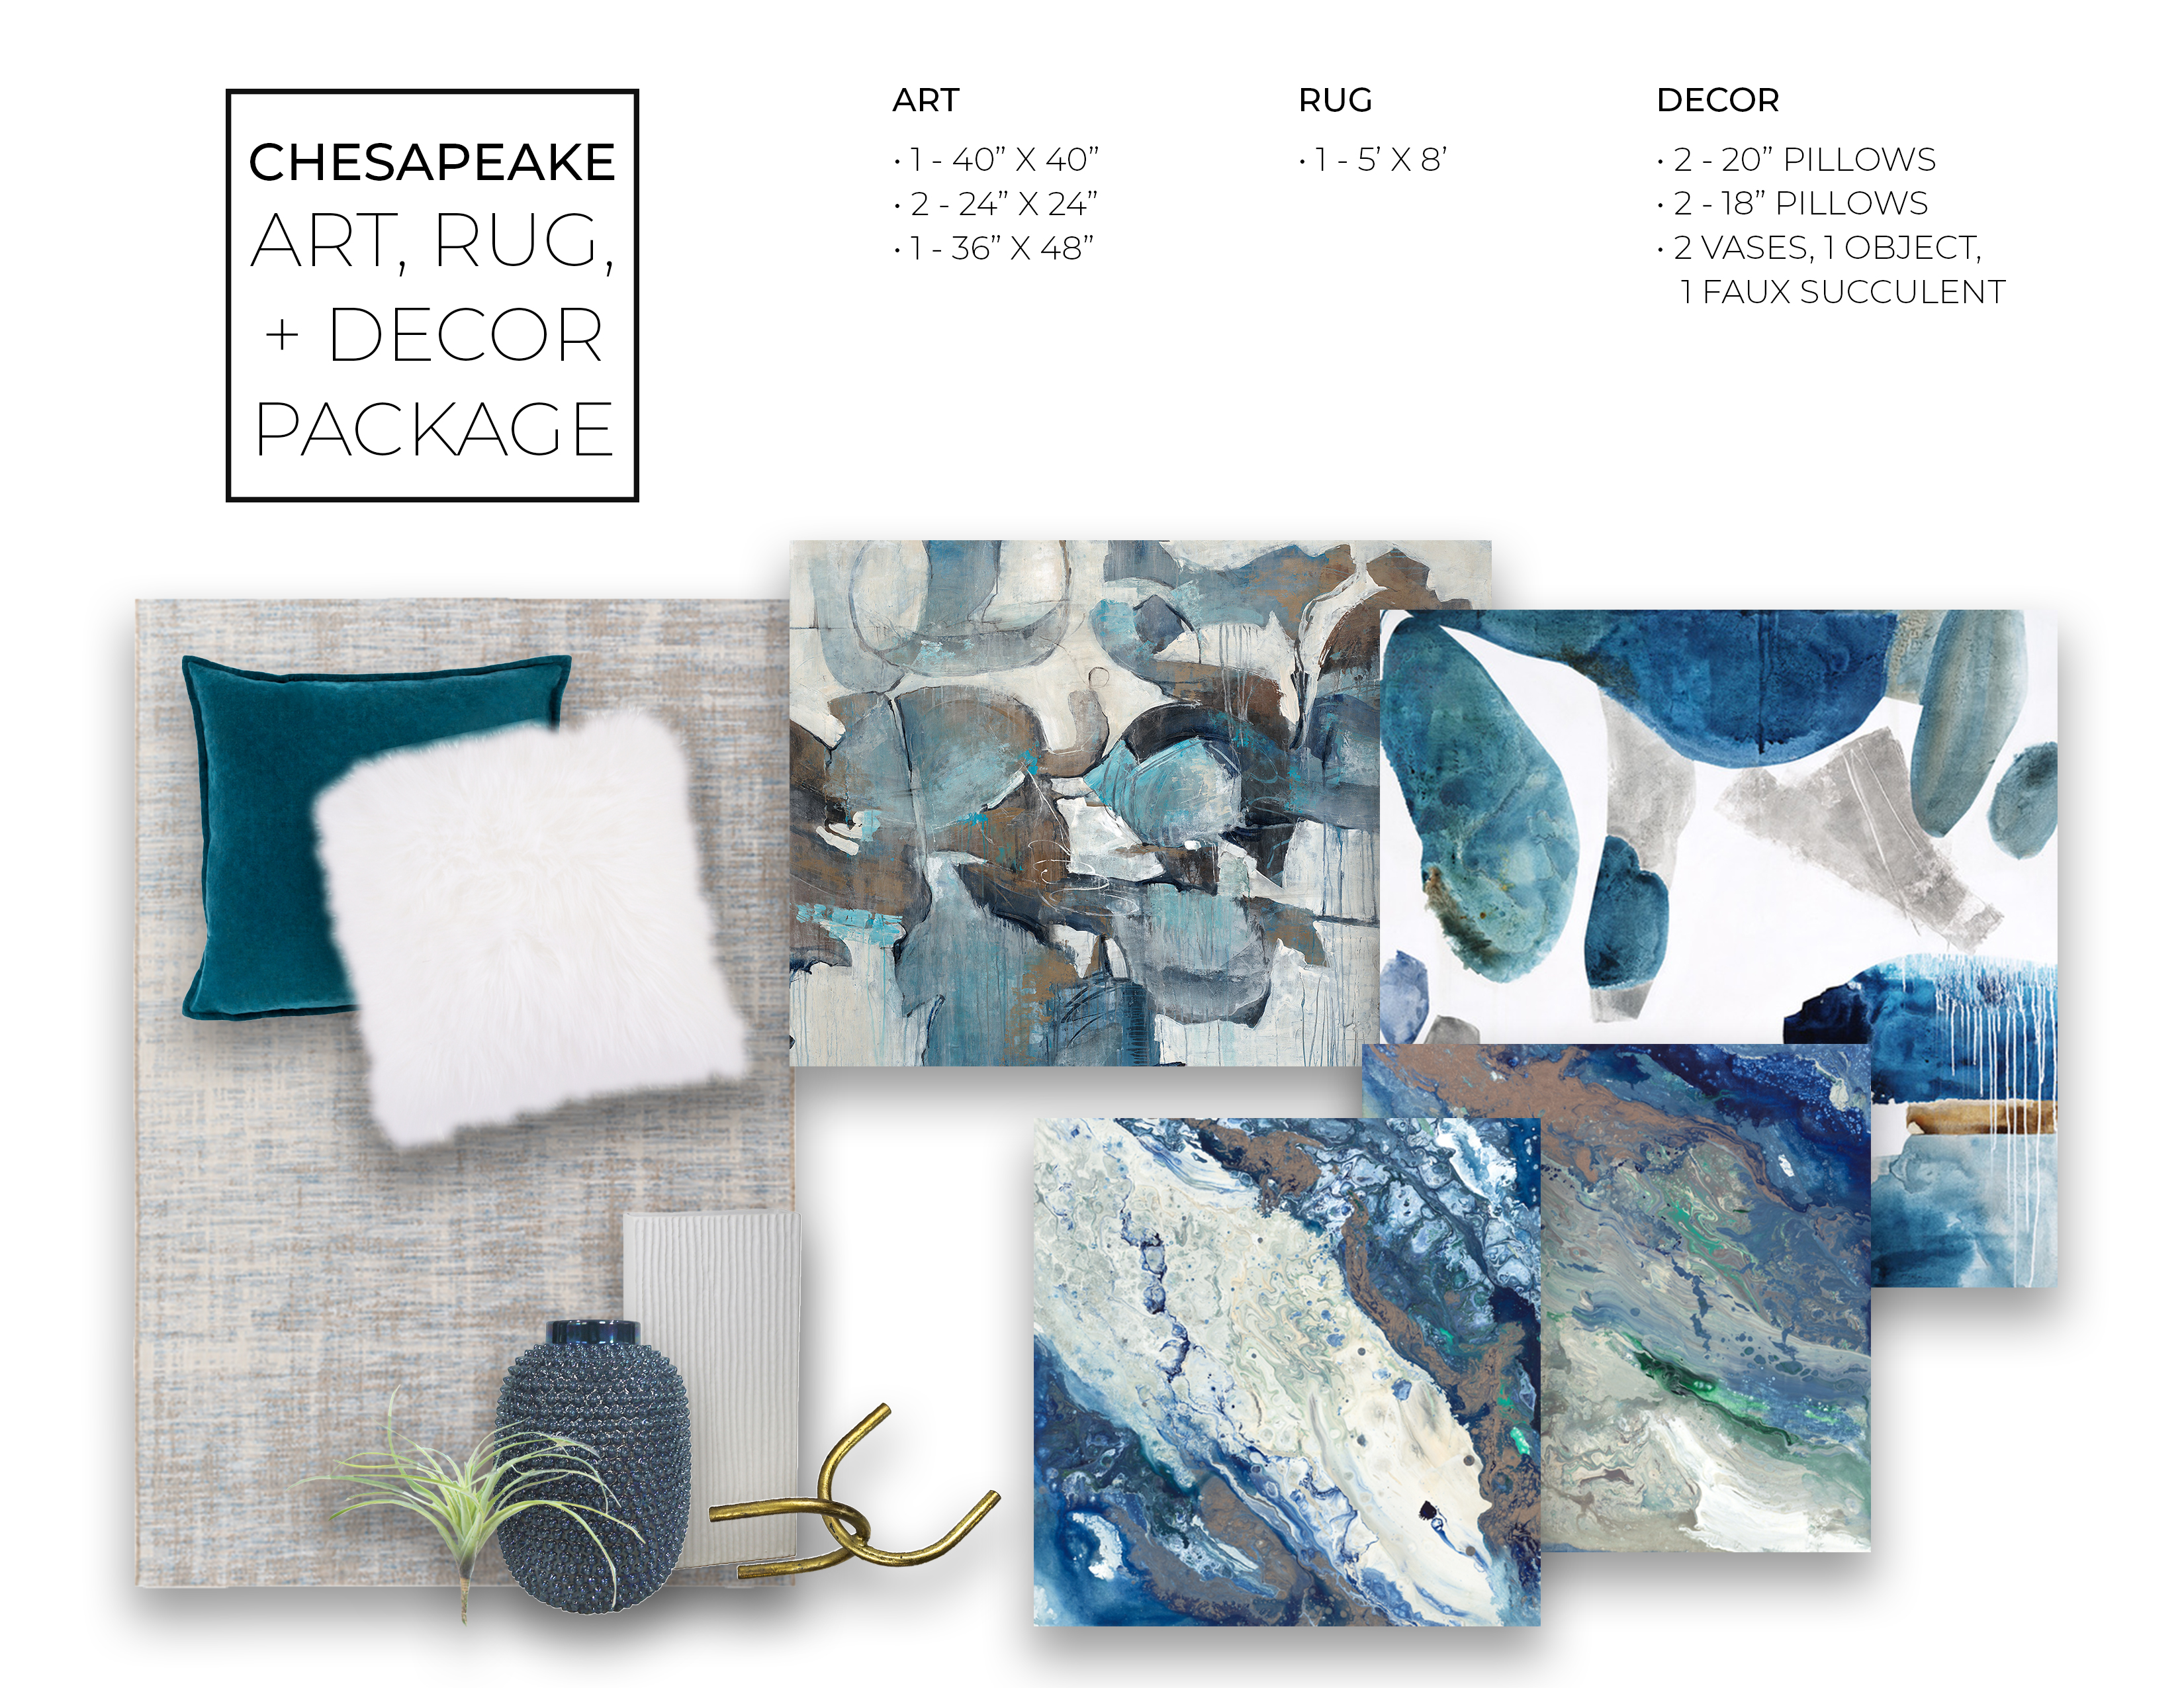 Chesapeake Art, Rug, + Decor Package